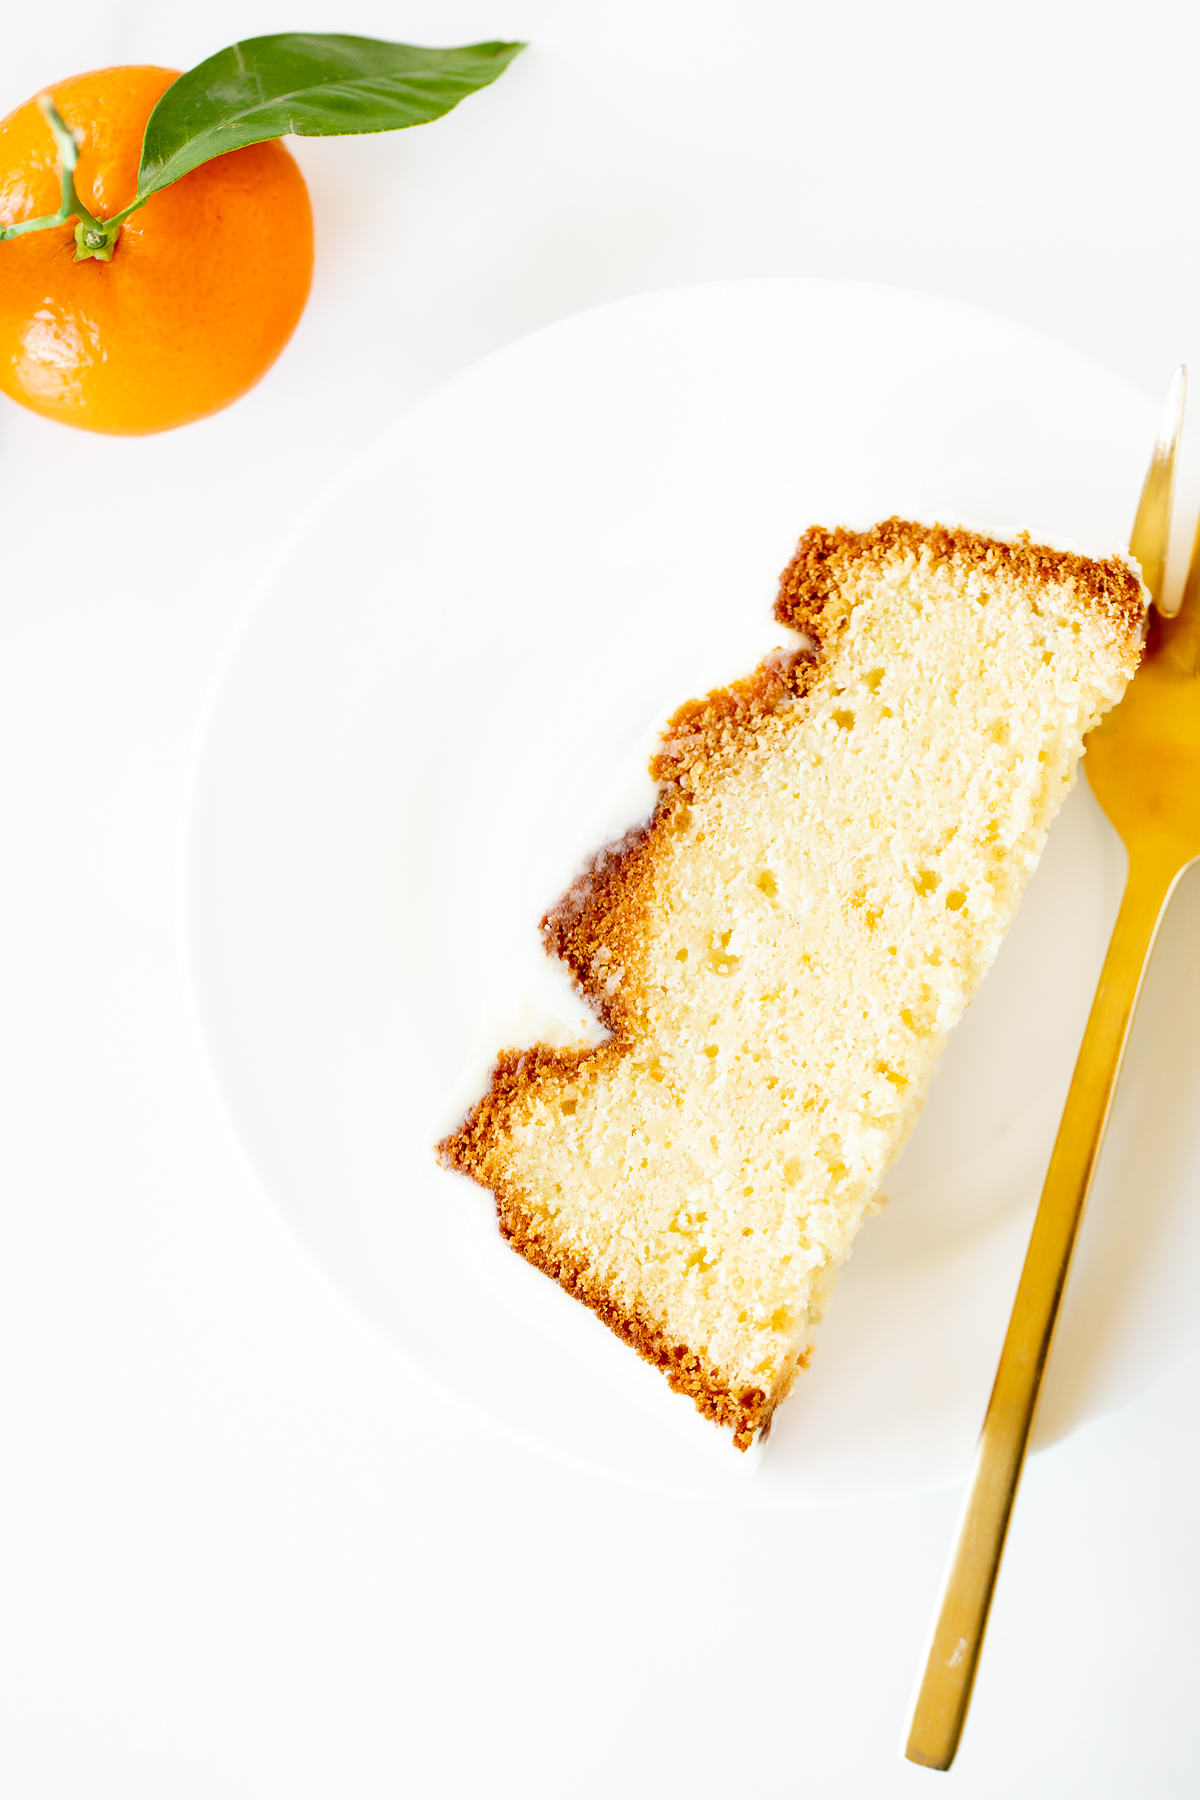 A slice of orange pound cake on a white plate.